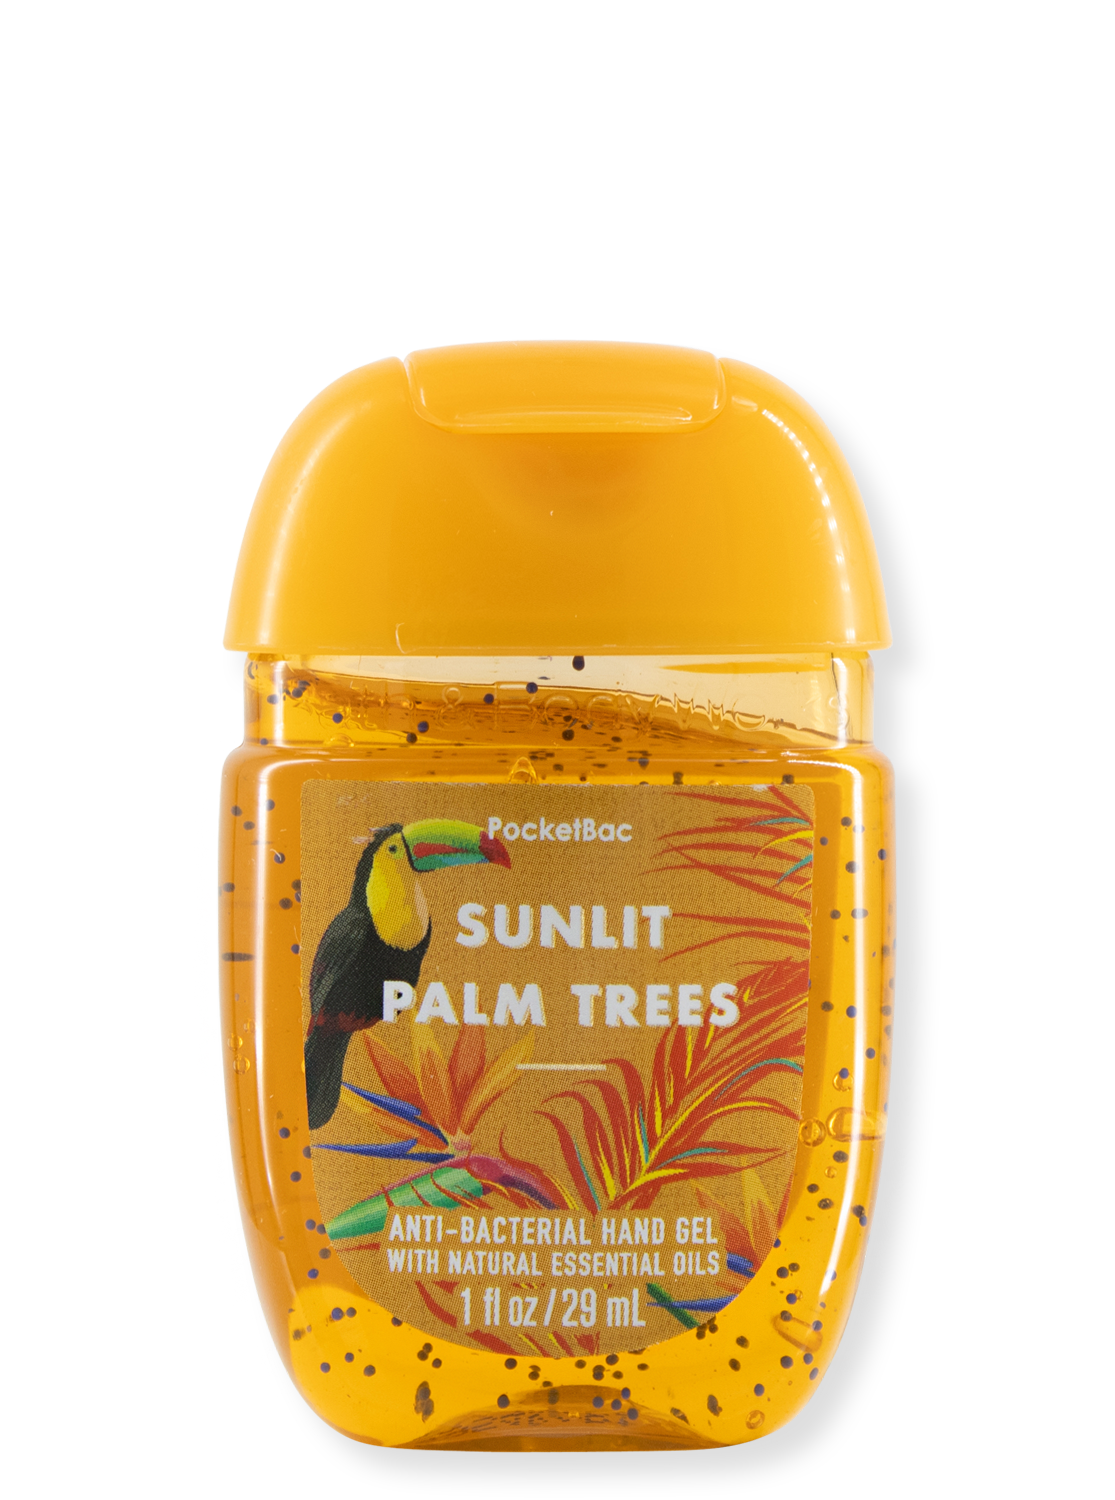 Hand-Desinfektionsgel - Sunlit Palm Trees - 29ml